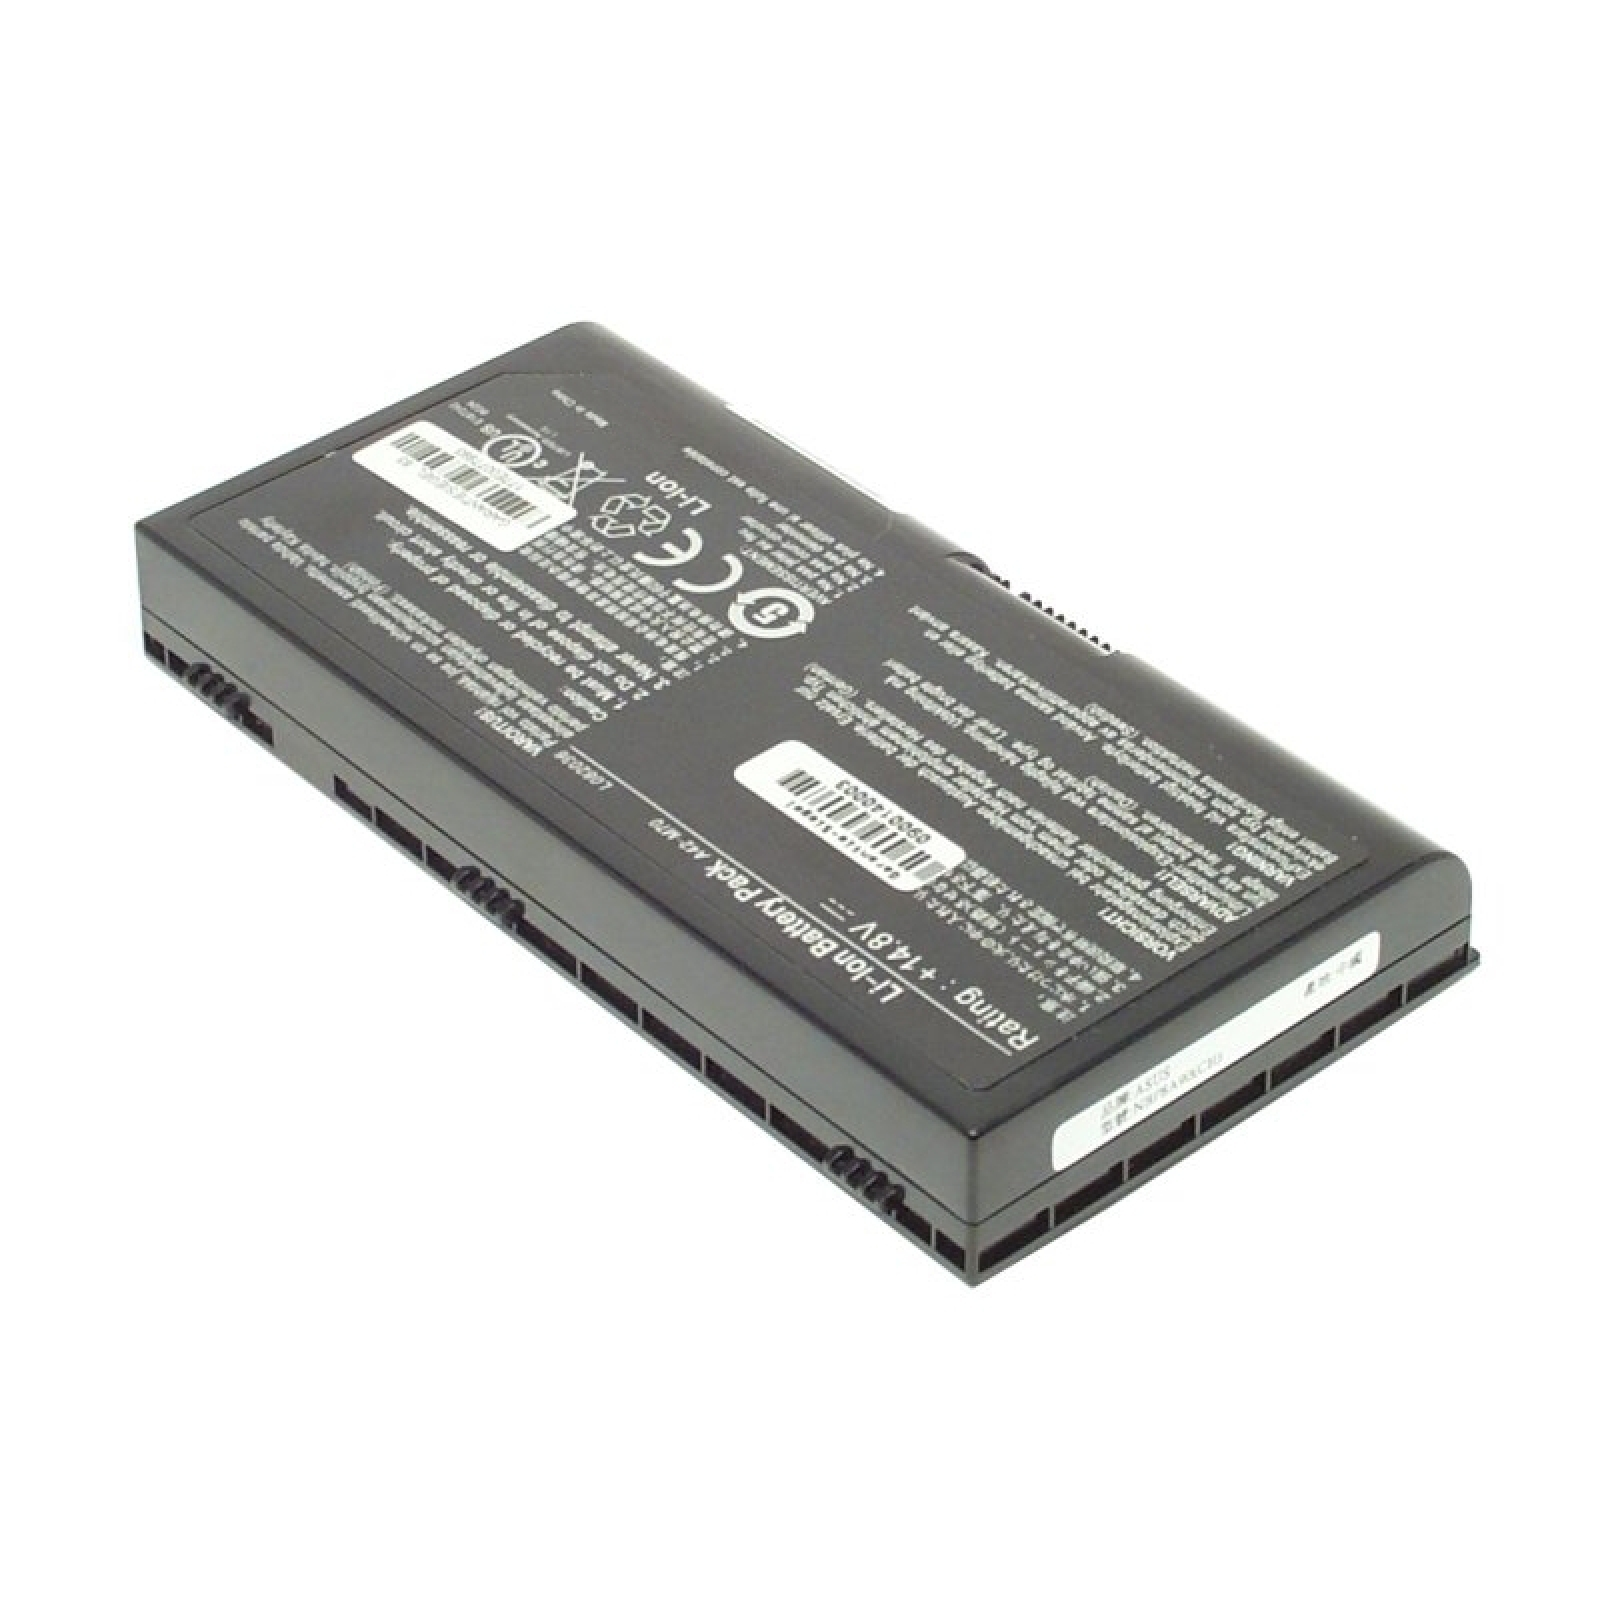 Lithium-Ionen MTXTEC G72Gx 14.8V, 4400 Volt, für ASUS Akku Notebook-Akku, 4400mAh 14.8 mAh LiIon, (LiIon)